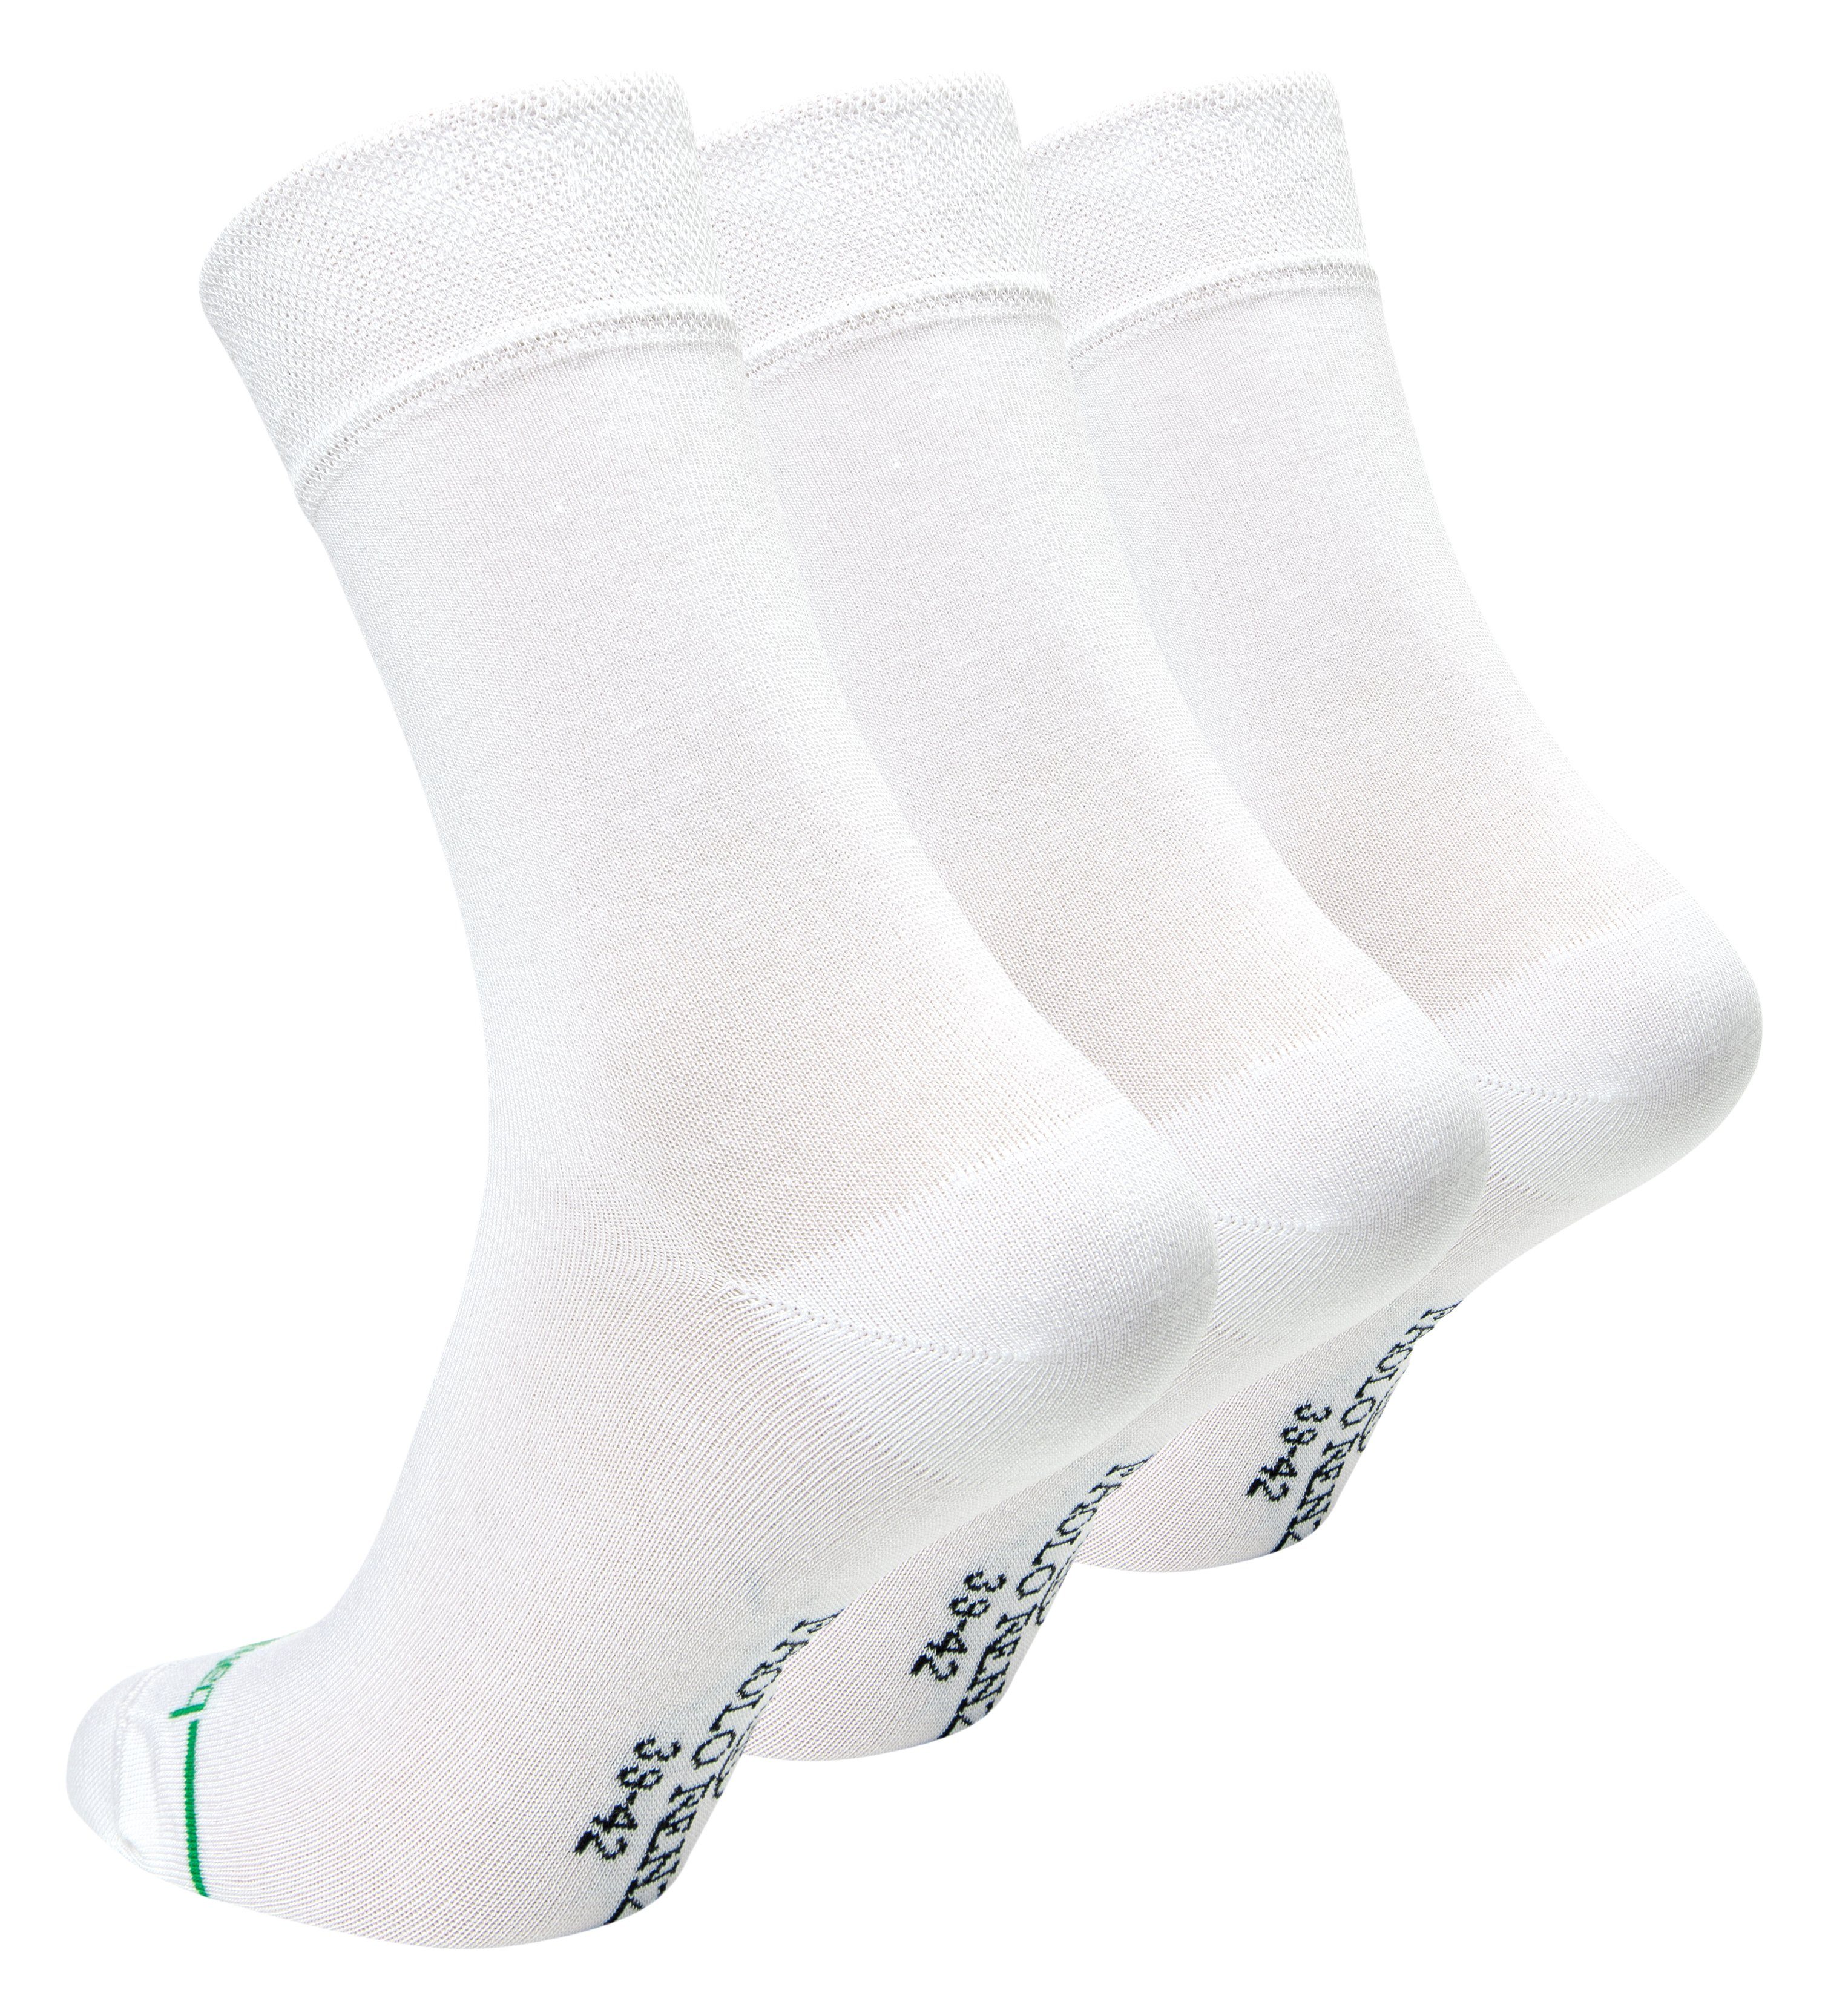 Paolo Renzo Gesundheitssocken aus Weiß Casual / Viskose Business Socken Atmungsaktive hochwertiger Herren Socken - (3-Paar) Bambus Geruchshemmend